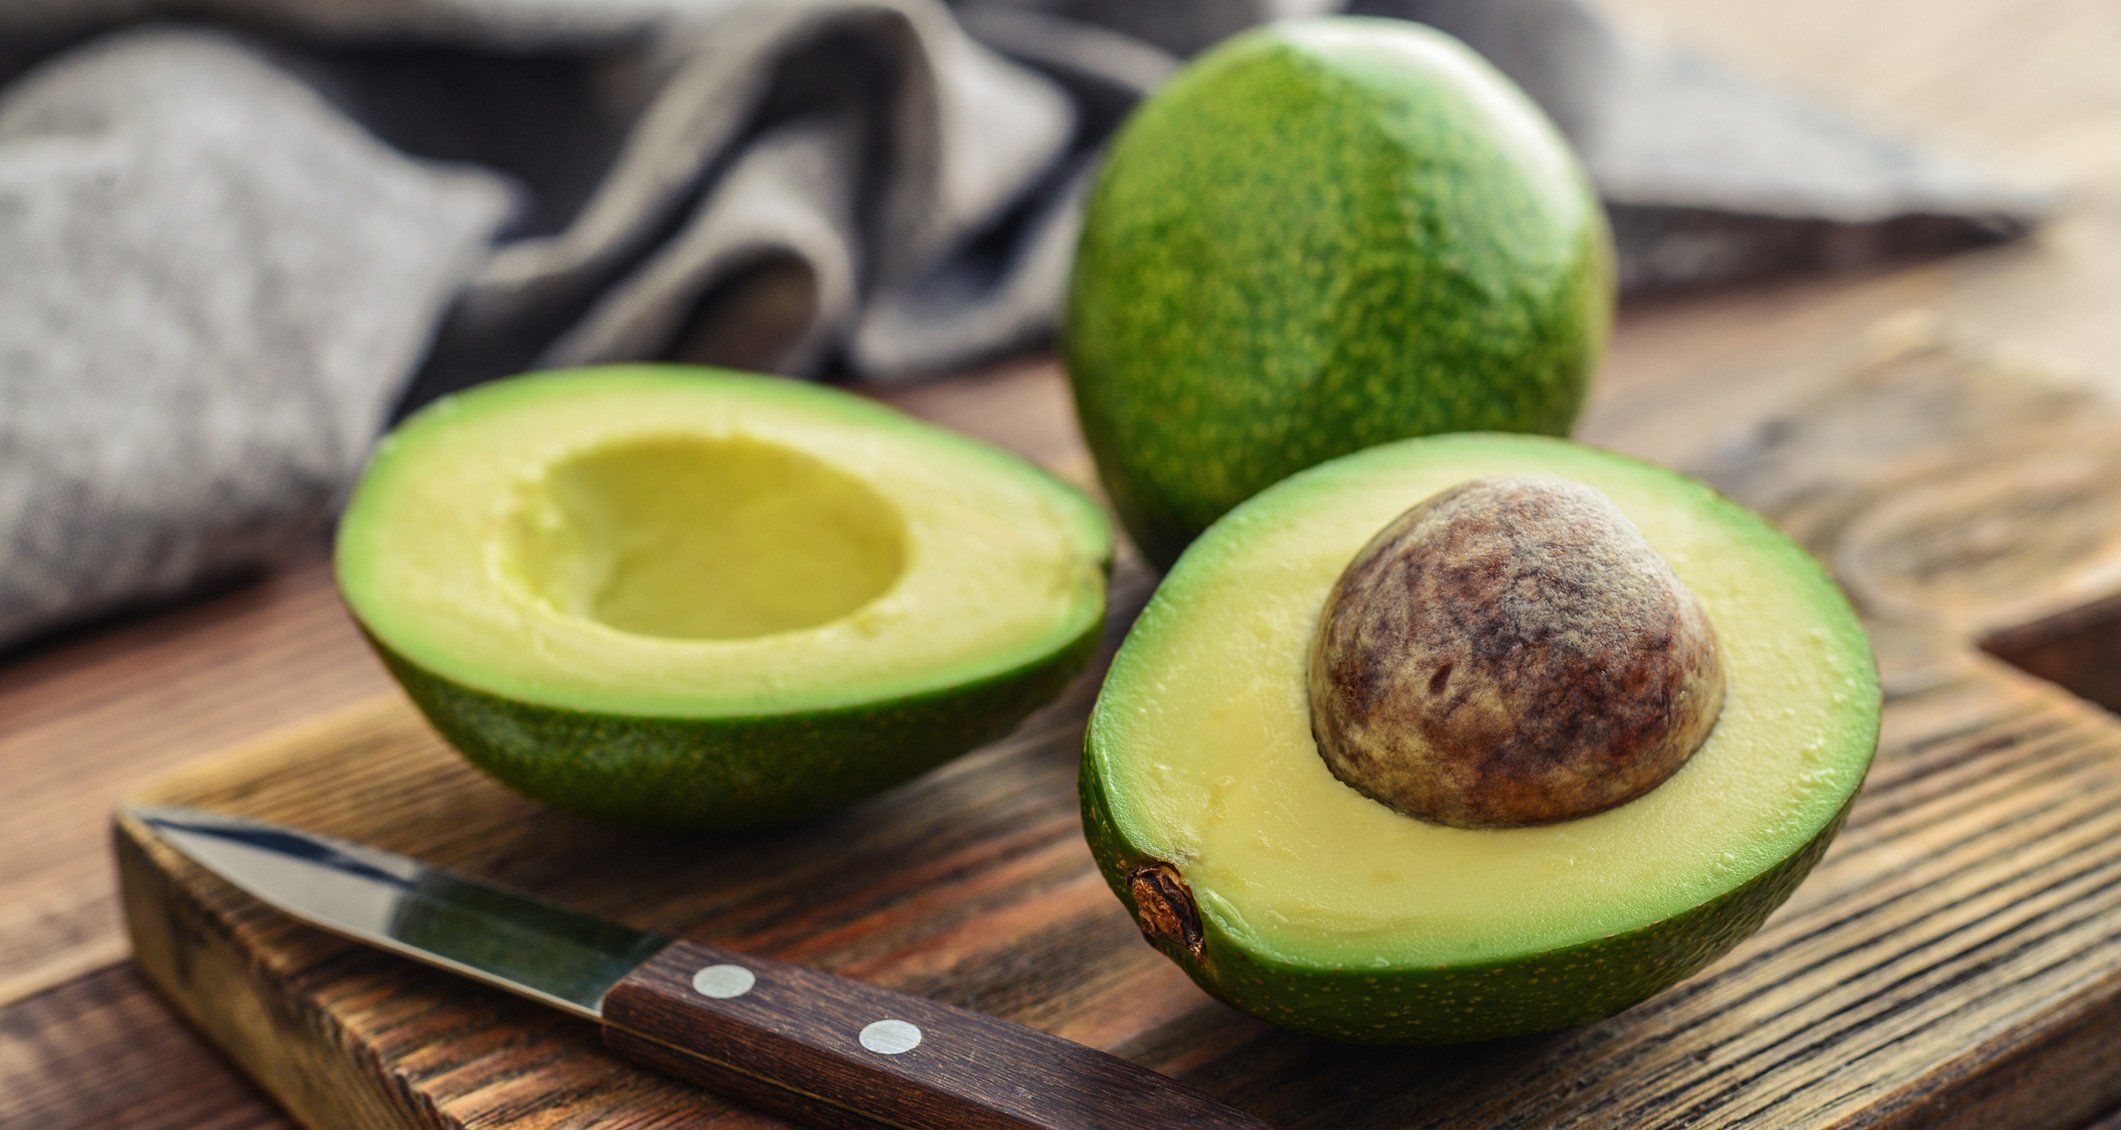 avocado health benefits: 15 reasons to eat these fabulous